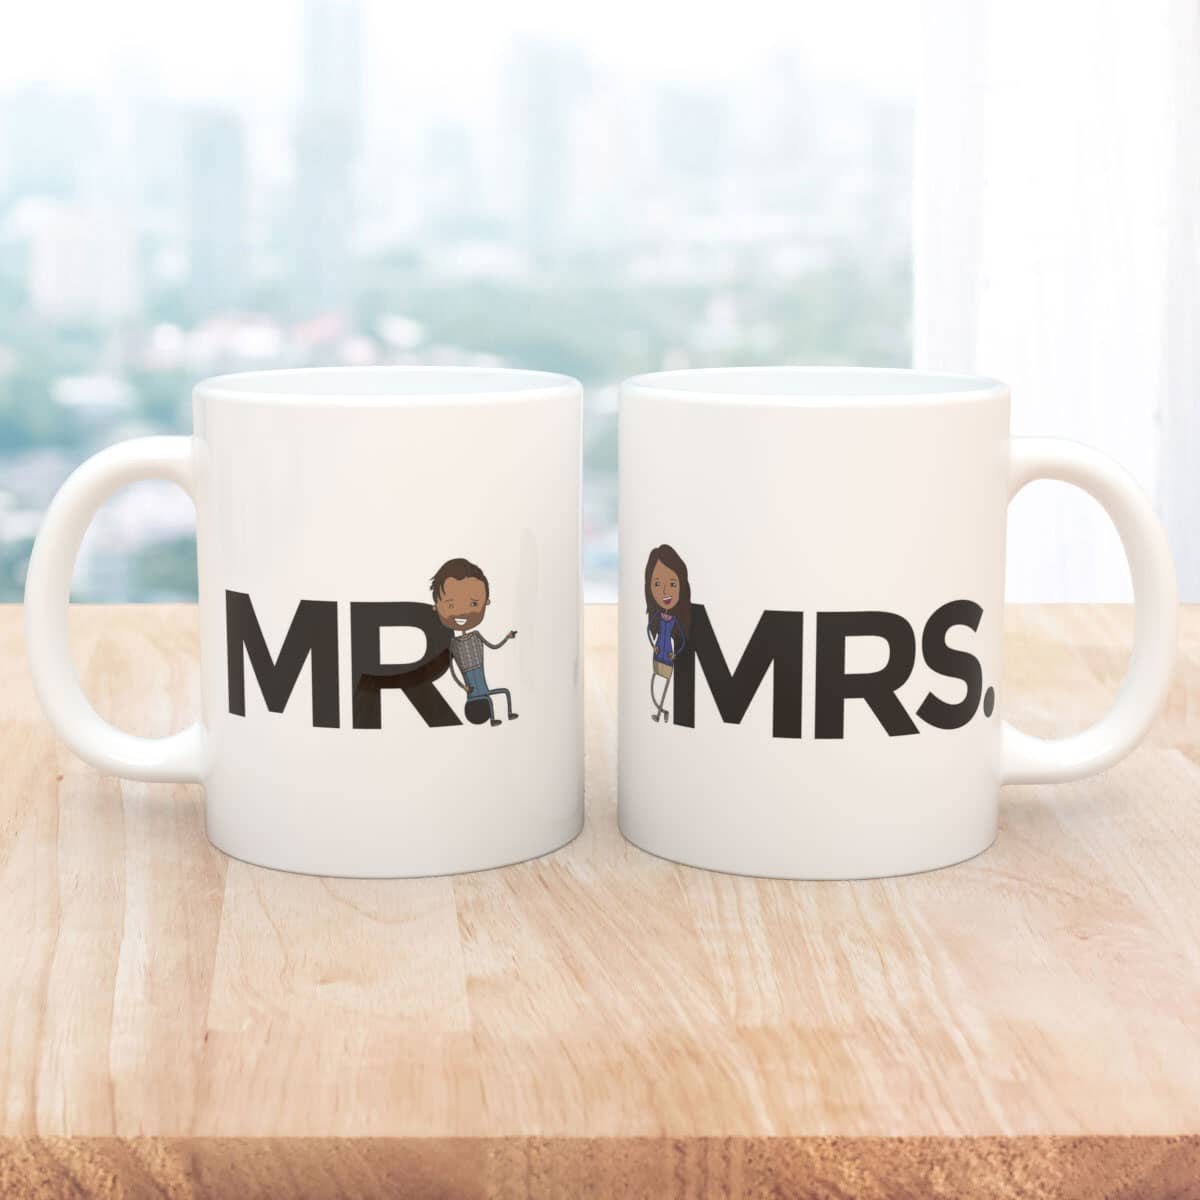 MR. & MRS. - Set of 2 Mugs